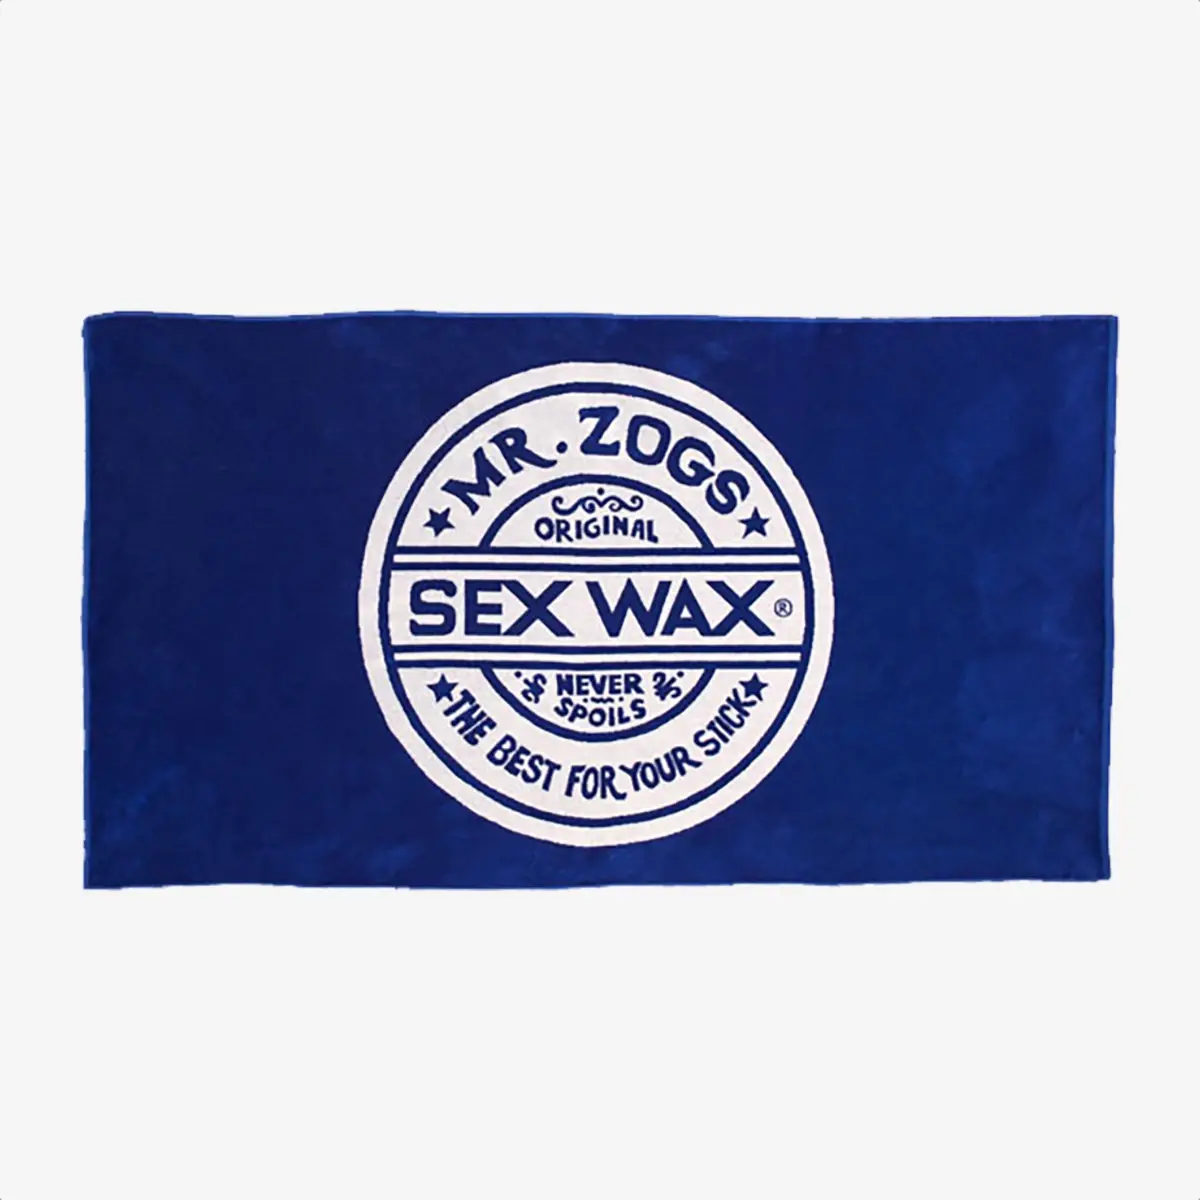 SEXWAX CAR AIR FRESHENER - Men's Accessories - Shop Sunnies, Hats, Bags &  More